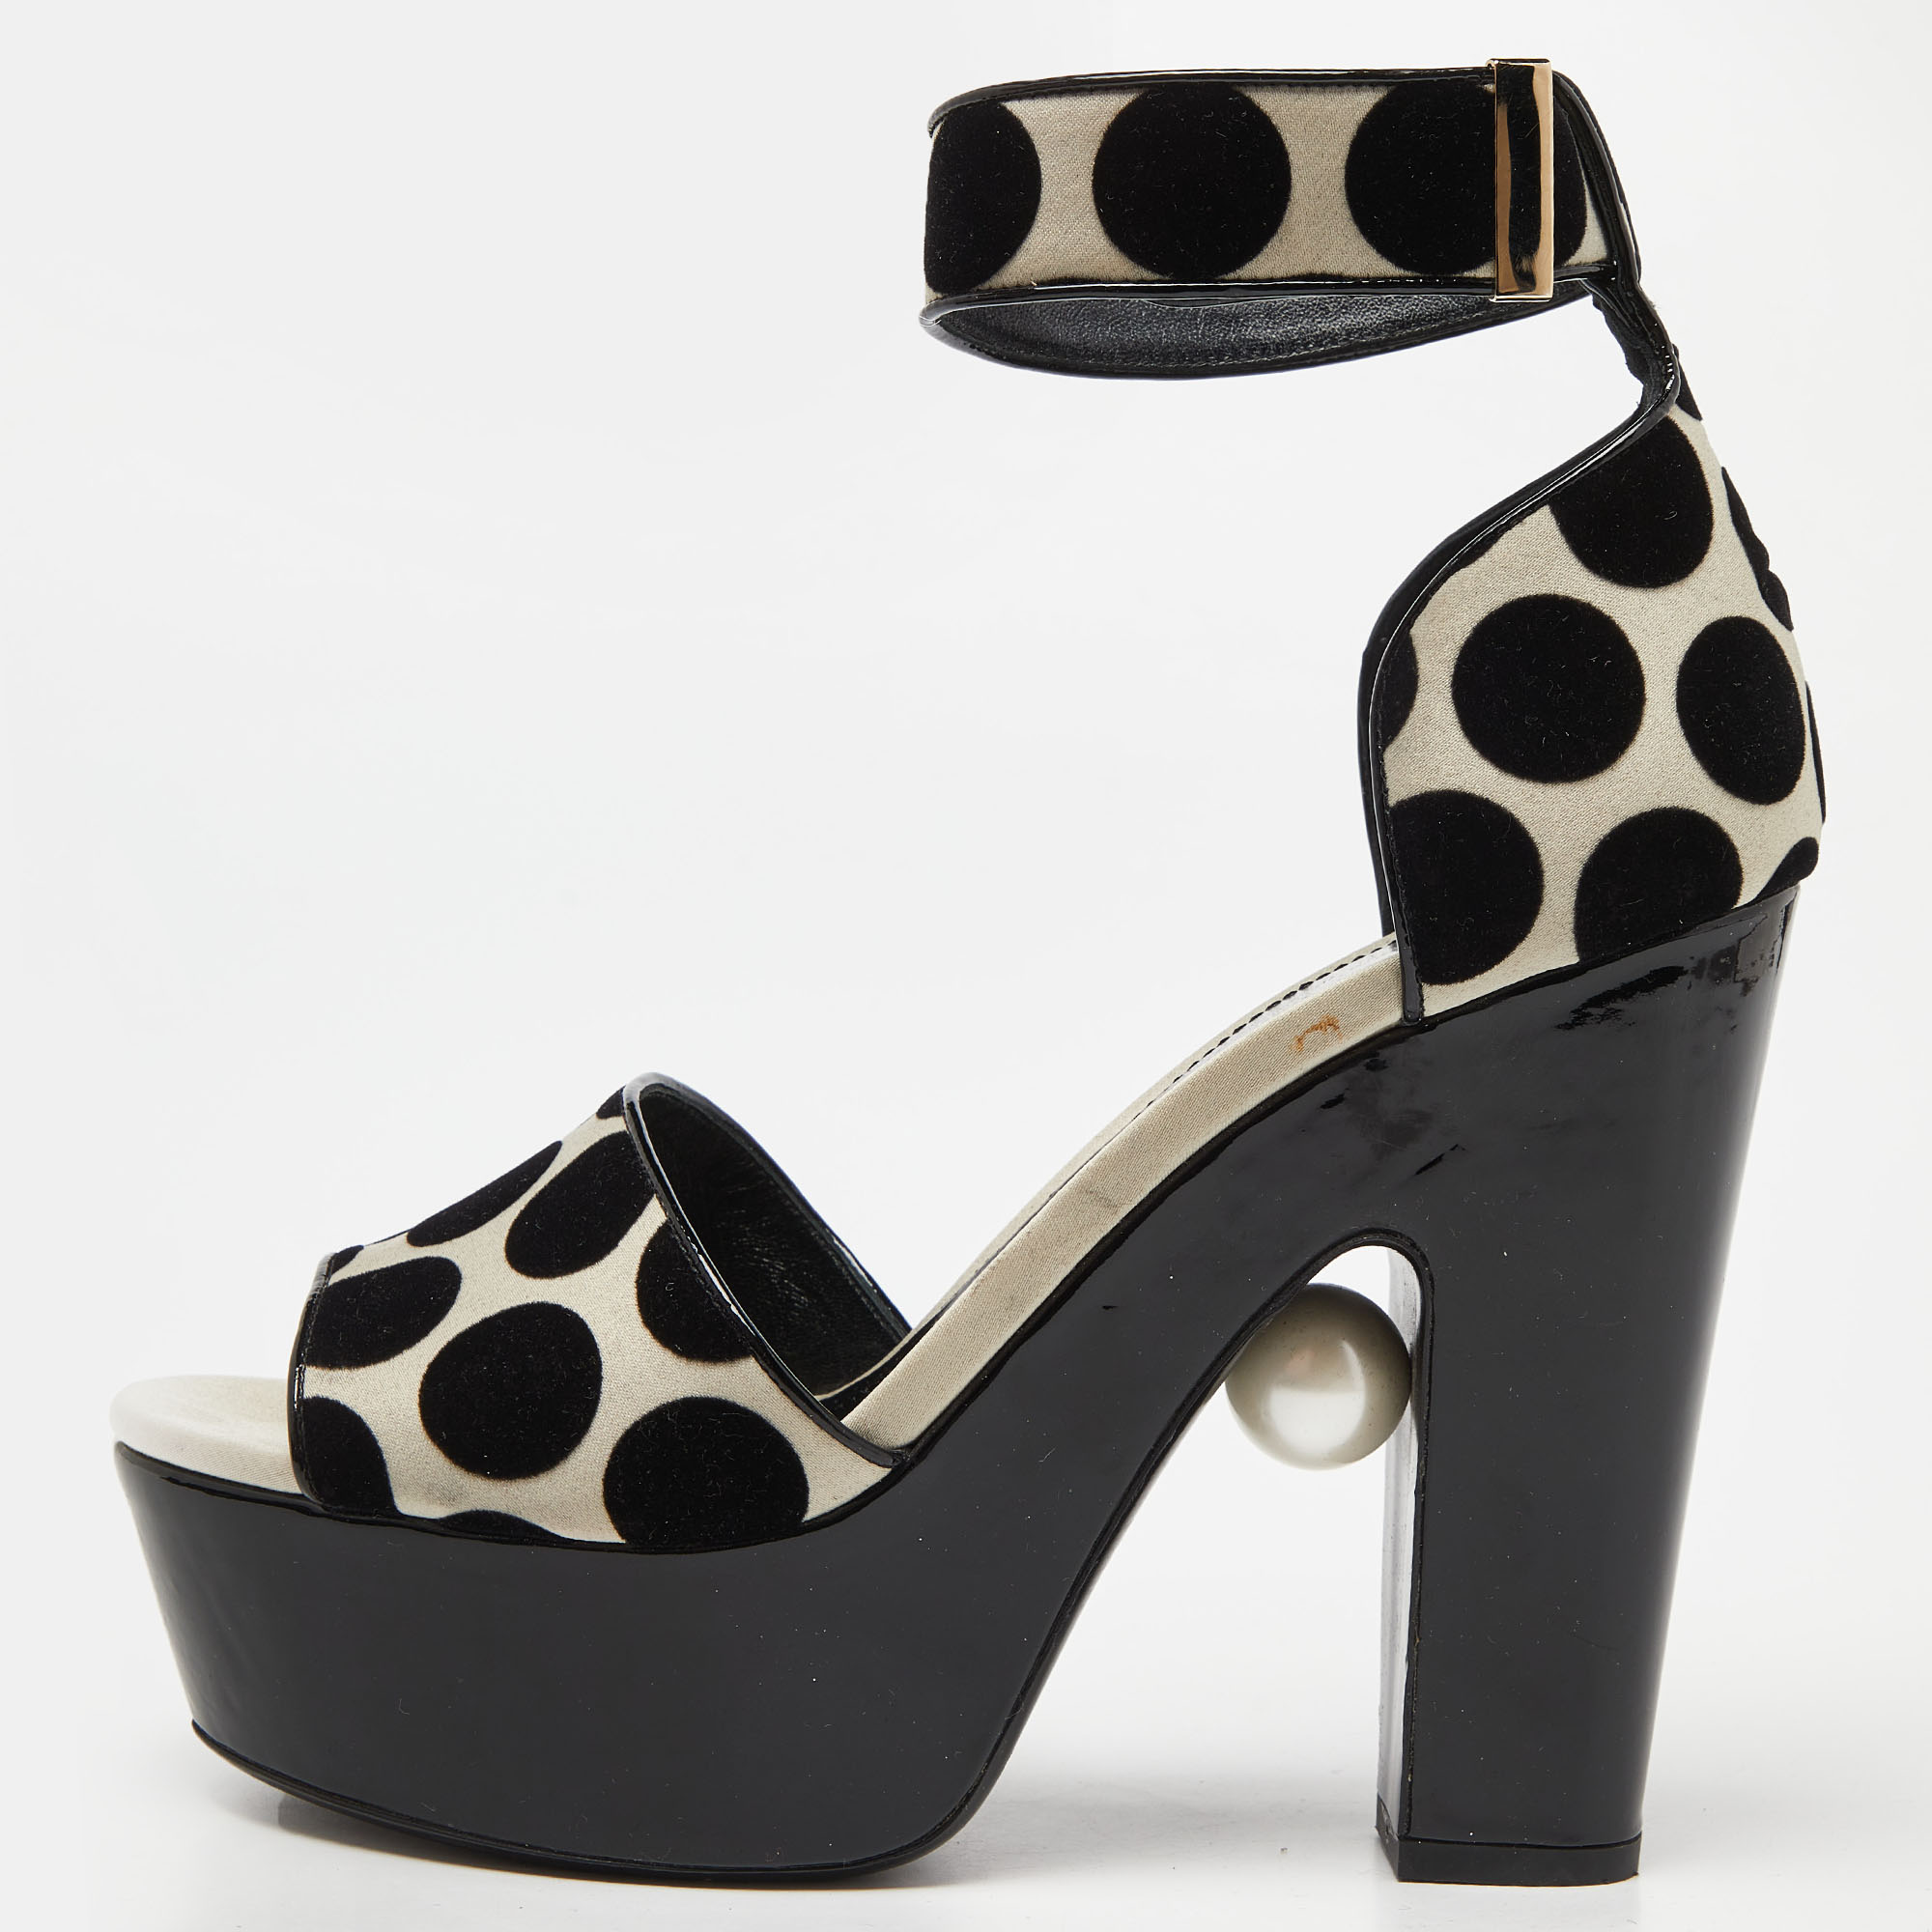 Nicholas kirkwood white/black polka dot velvet platform pearl block heel ankle strap sandals size 39.5